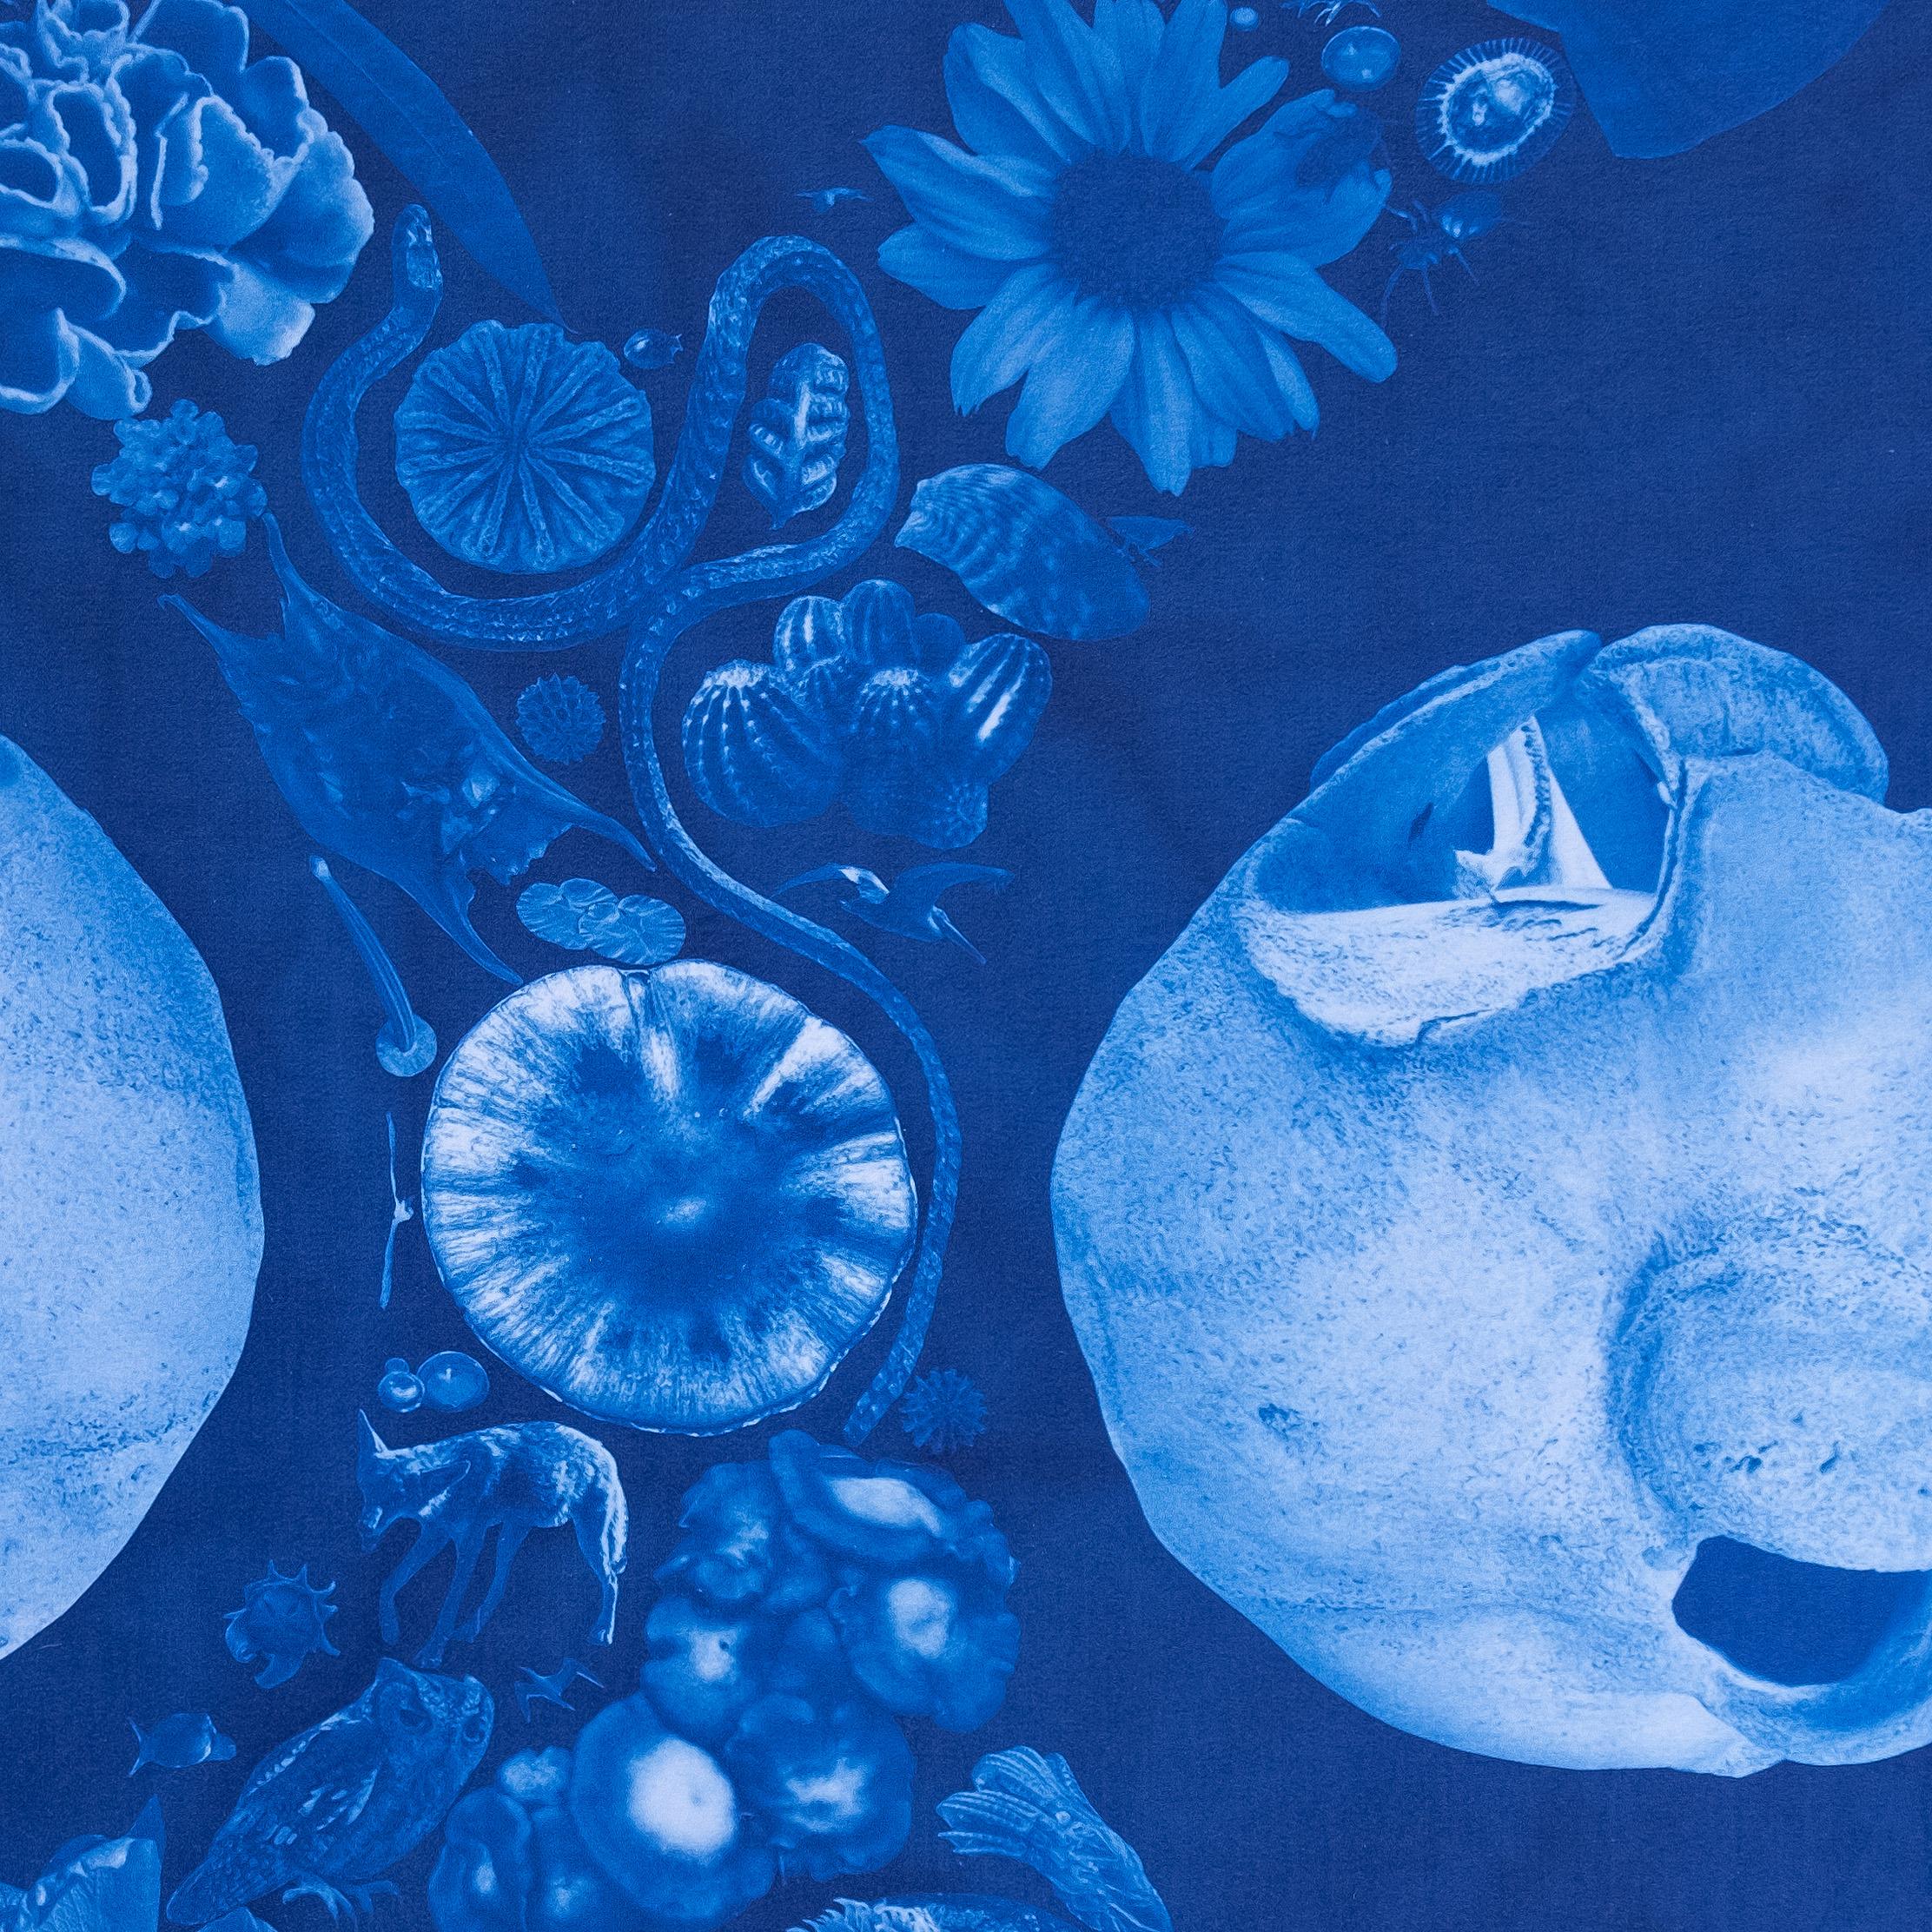 Annalise Neil Abstract Photograph - A Naturalist Cyanotype on Cotton Sateen, "Polyphony"